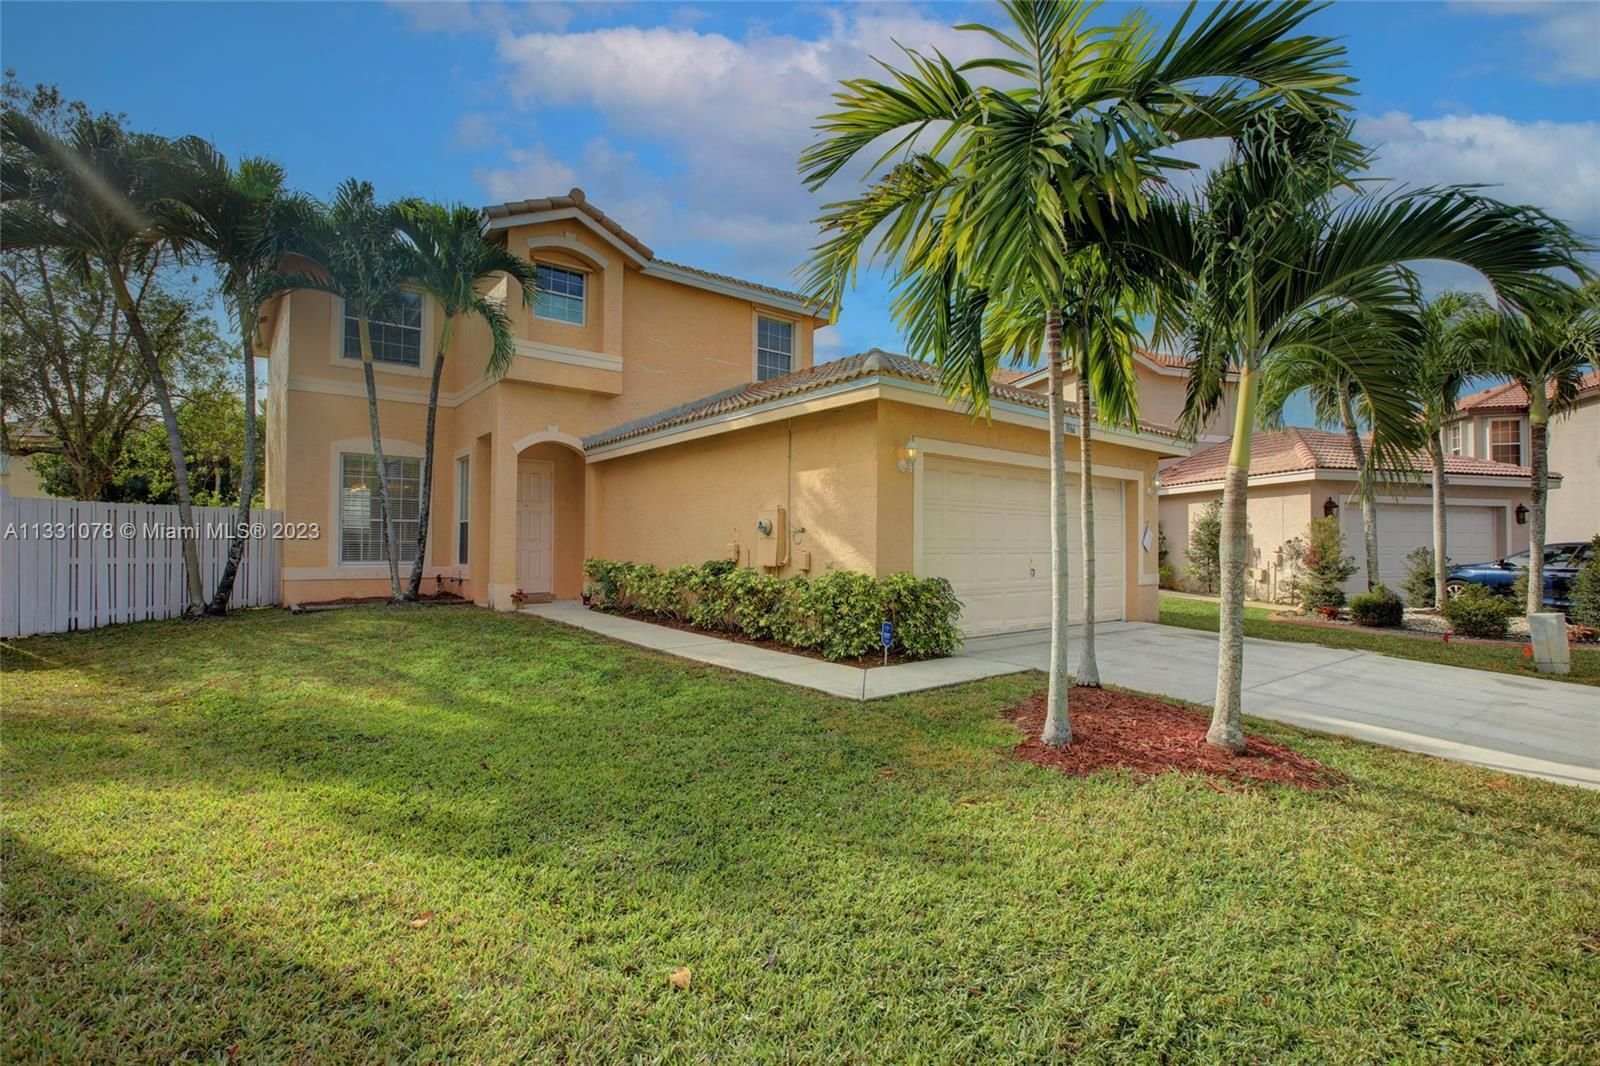 Real estate property located at 3166 176th Ter, Broward County, Miramar, FL